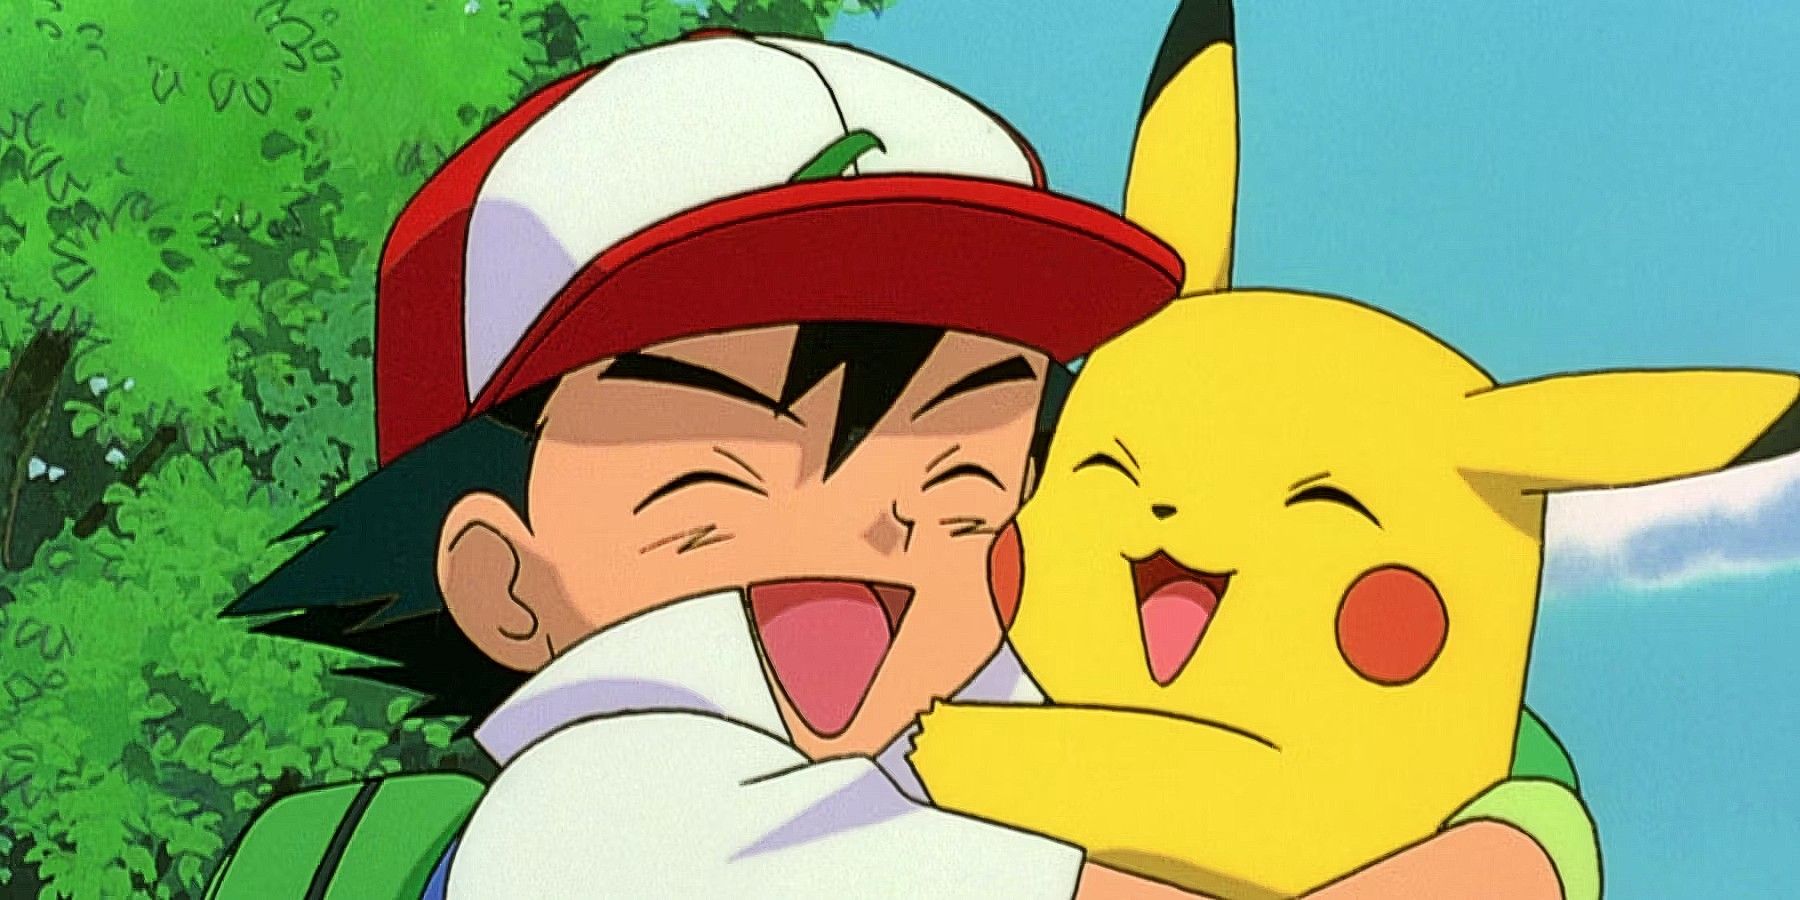 Ash and Pikachu hugging in Pokémon